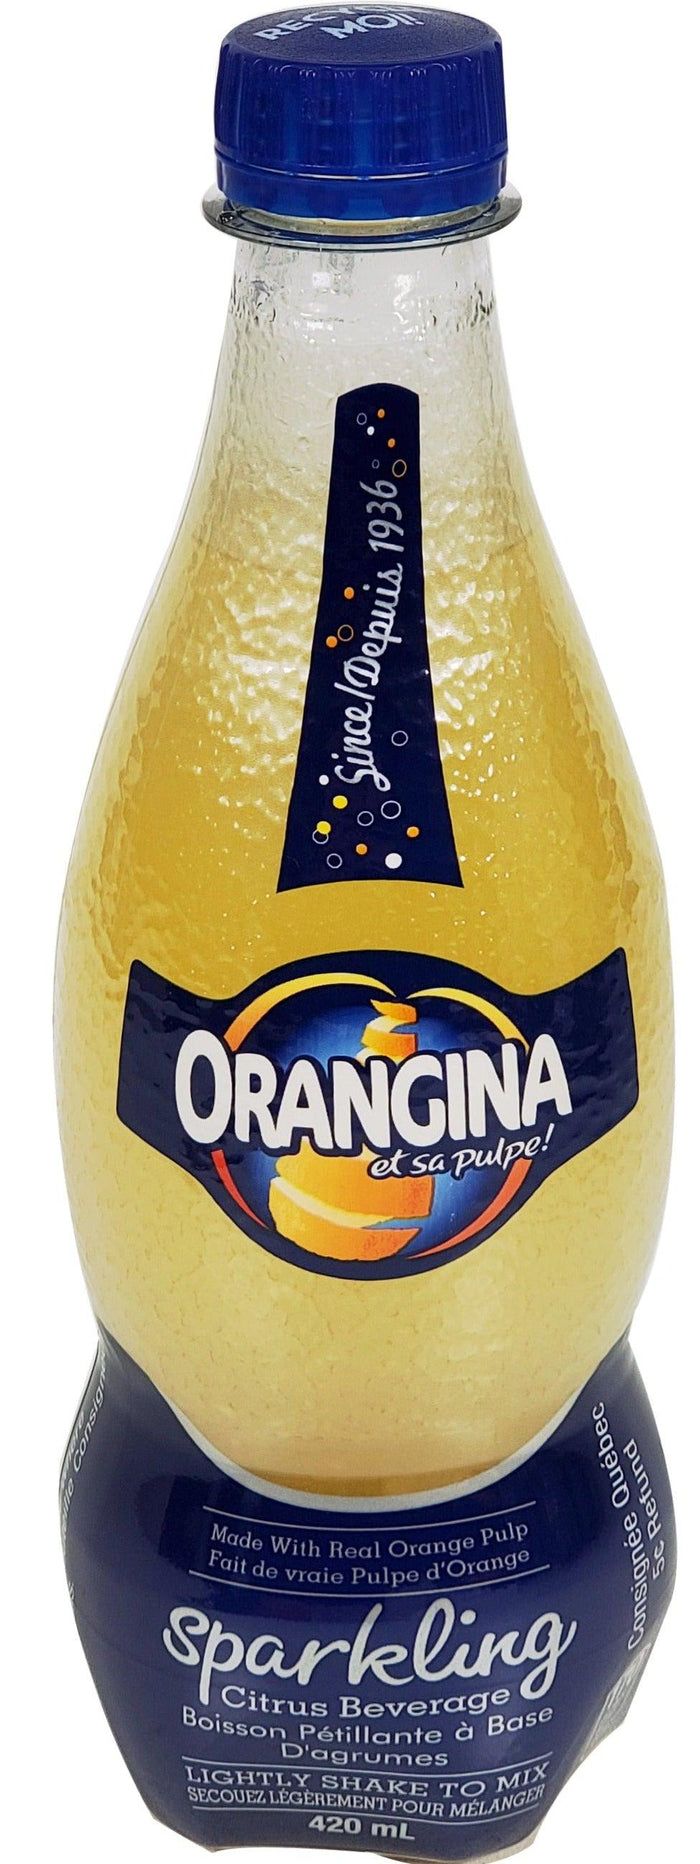 CLR - Orangina - Sparkling Orange - Pet Bottles